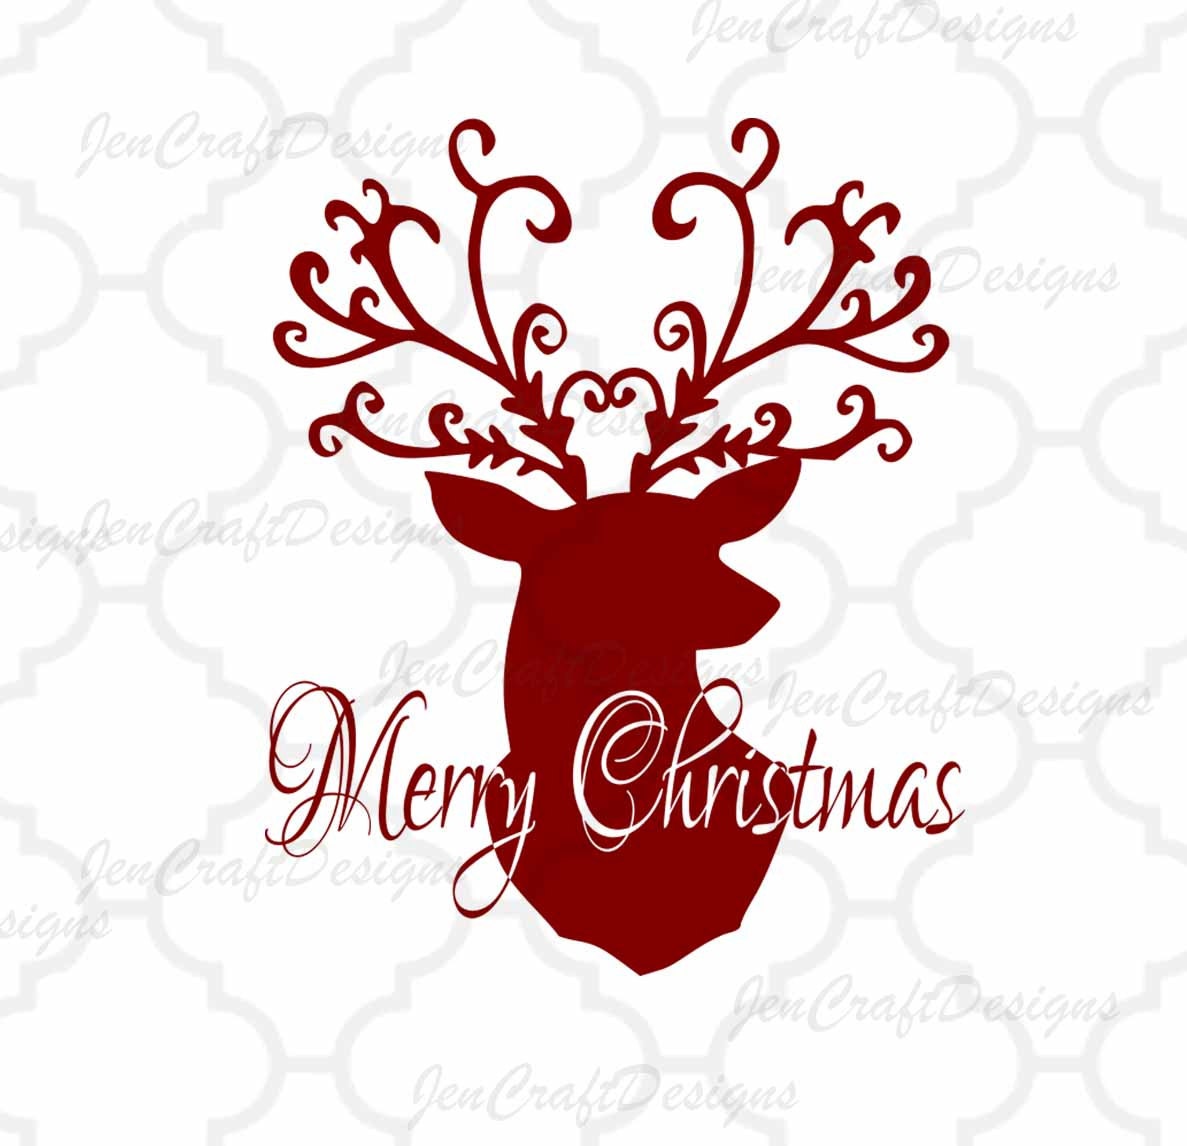 Download Christmas Reindeer SVGEPS Png DXFdigital download files for